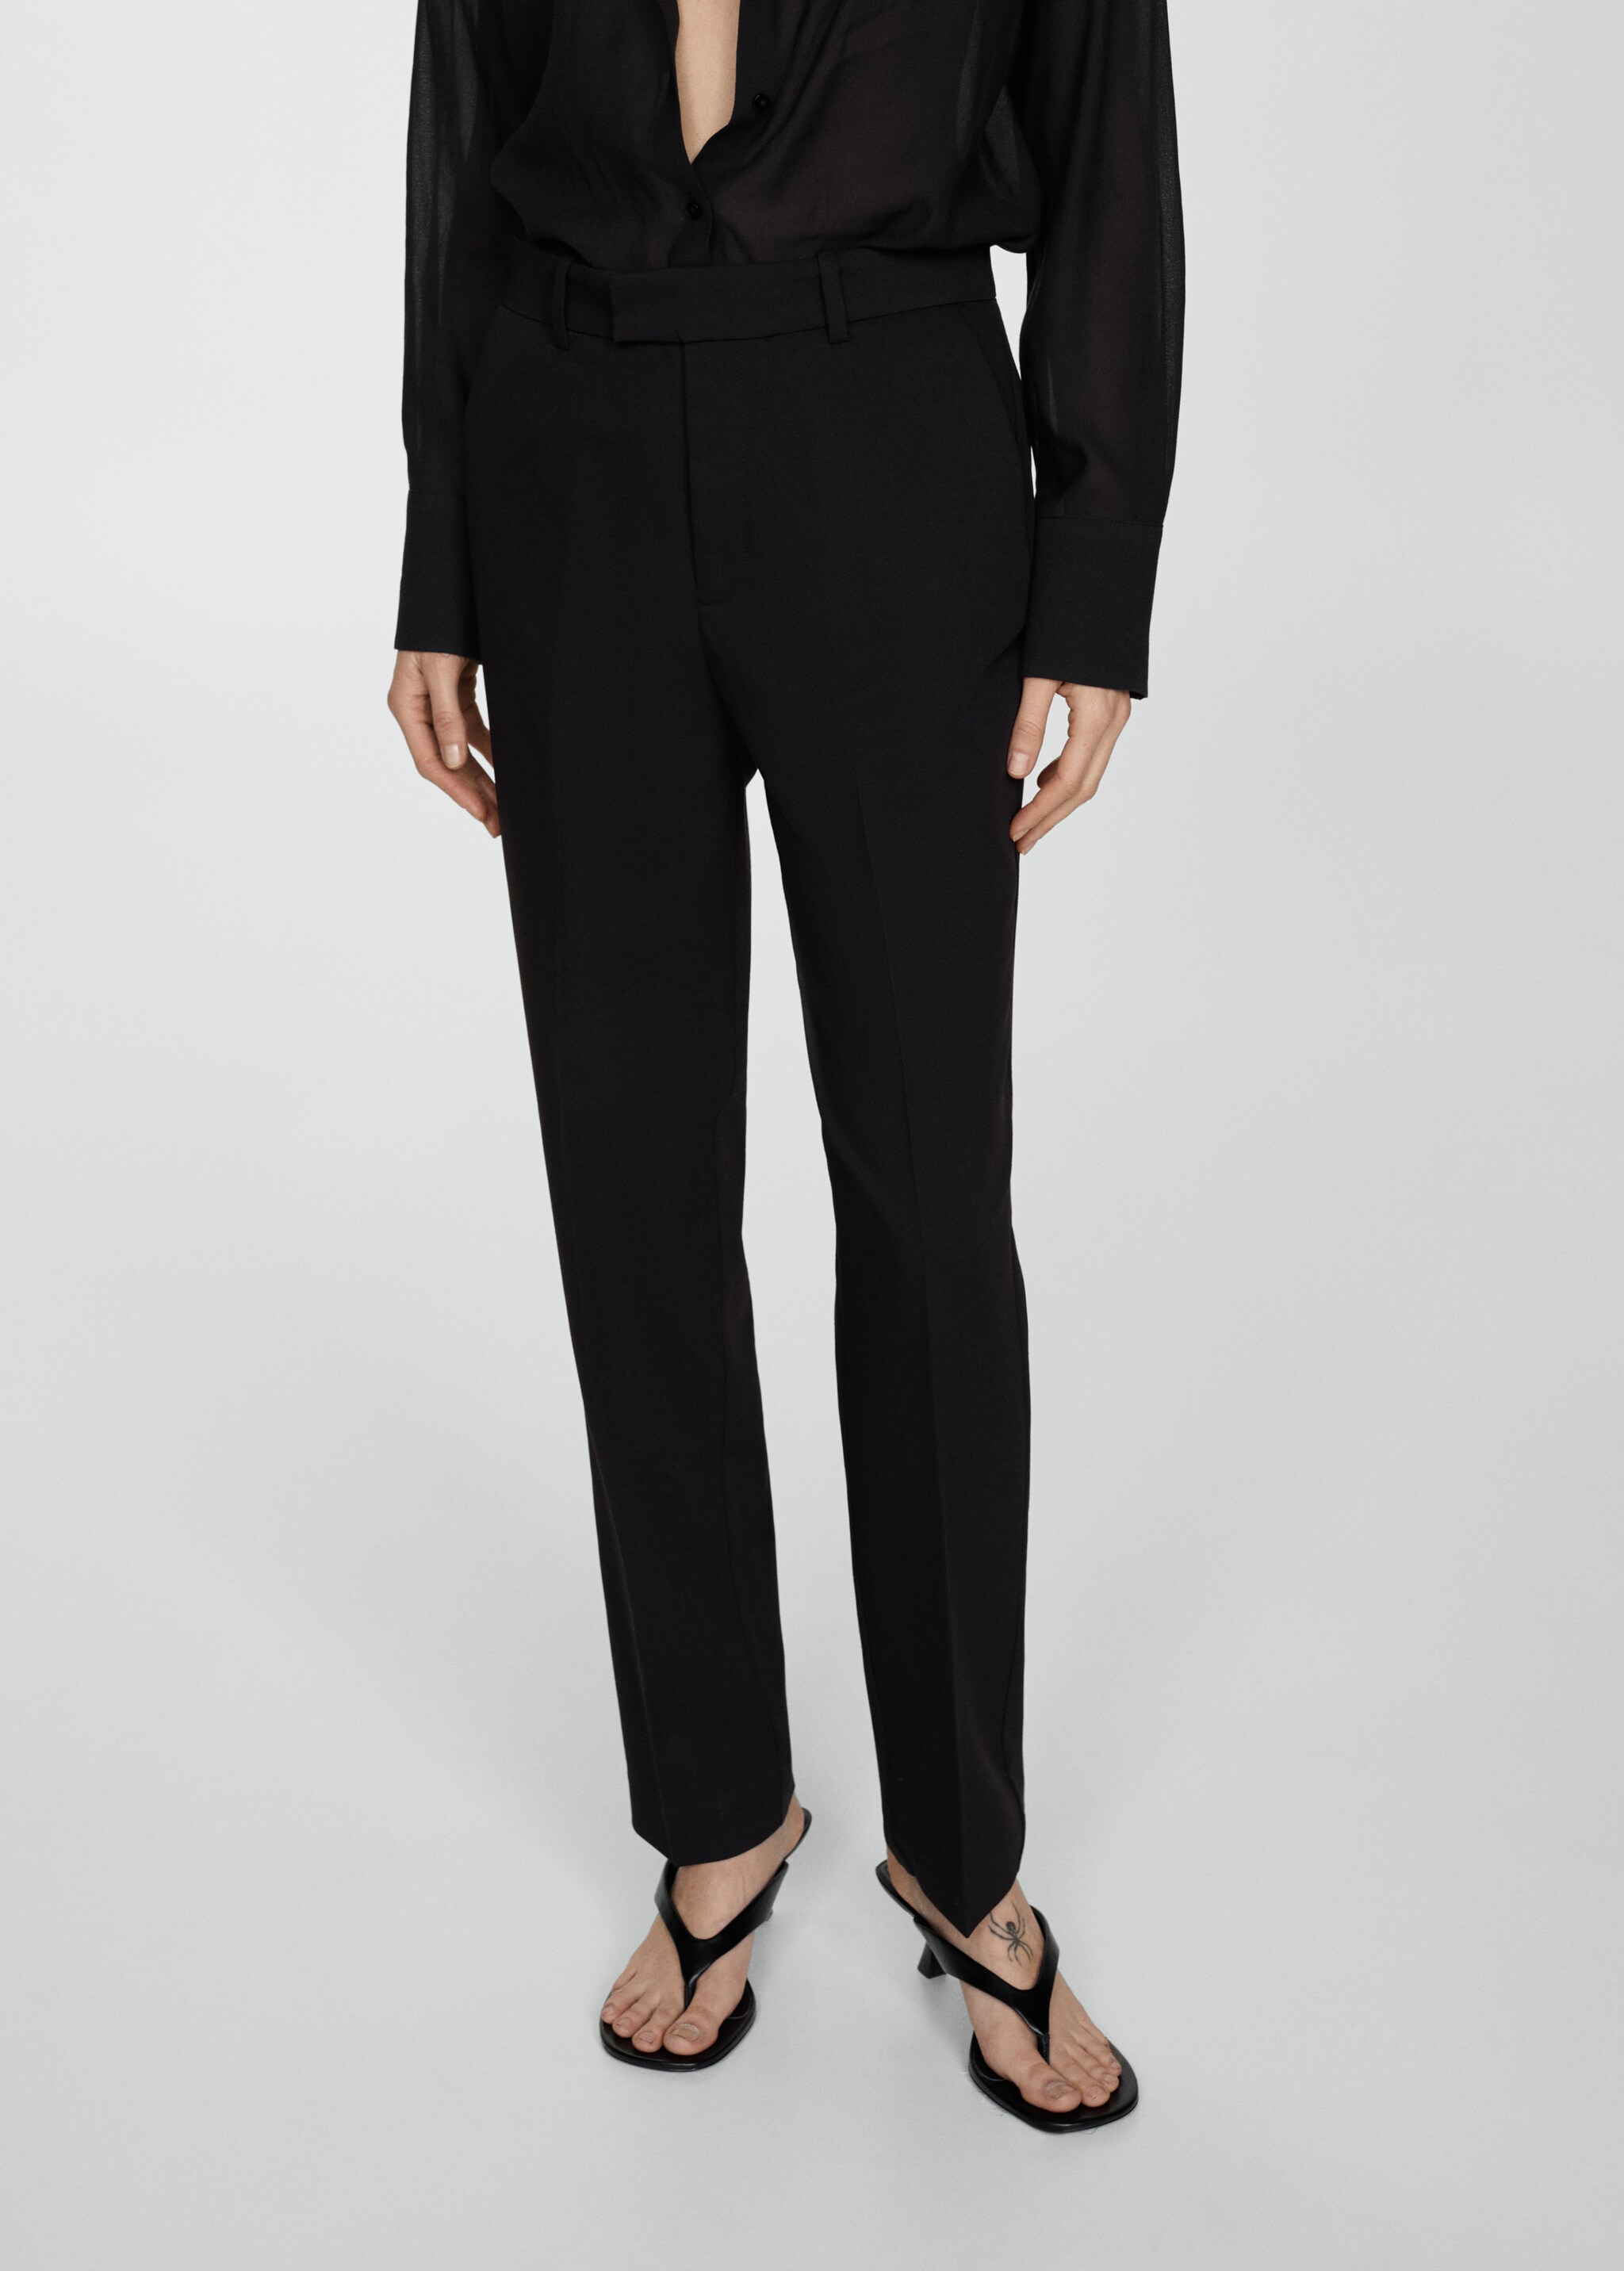 Straight suit trousers - Medium plane